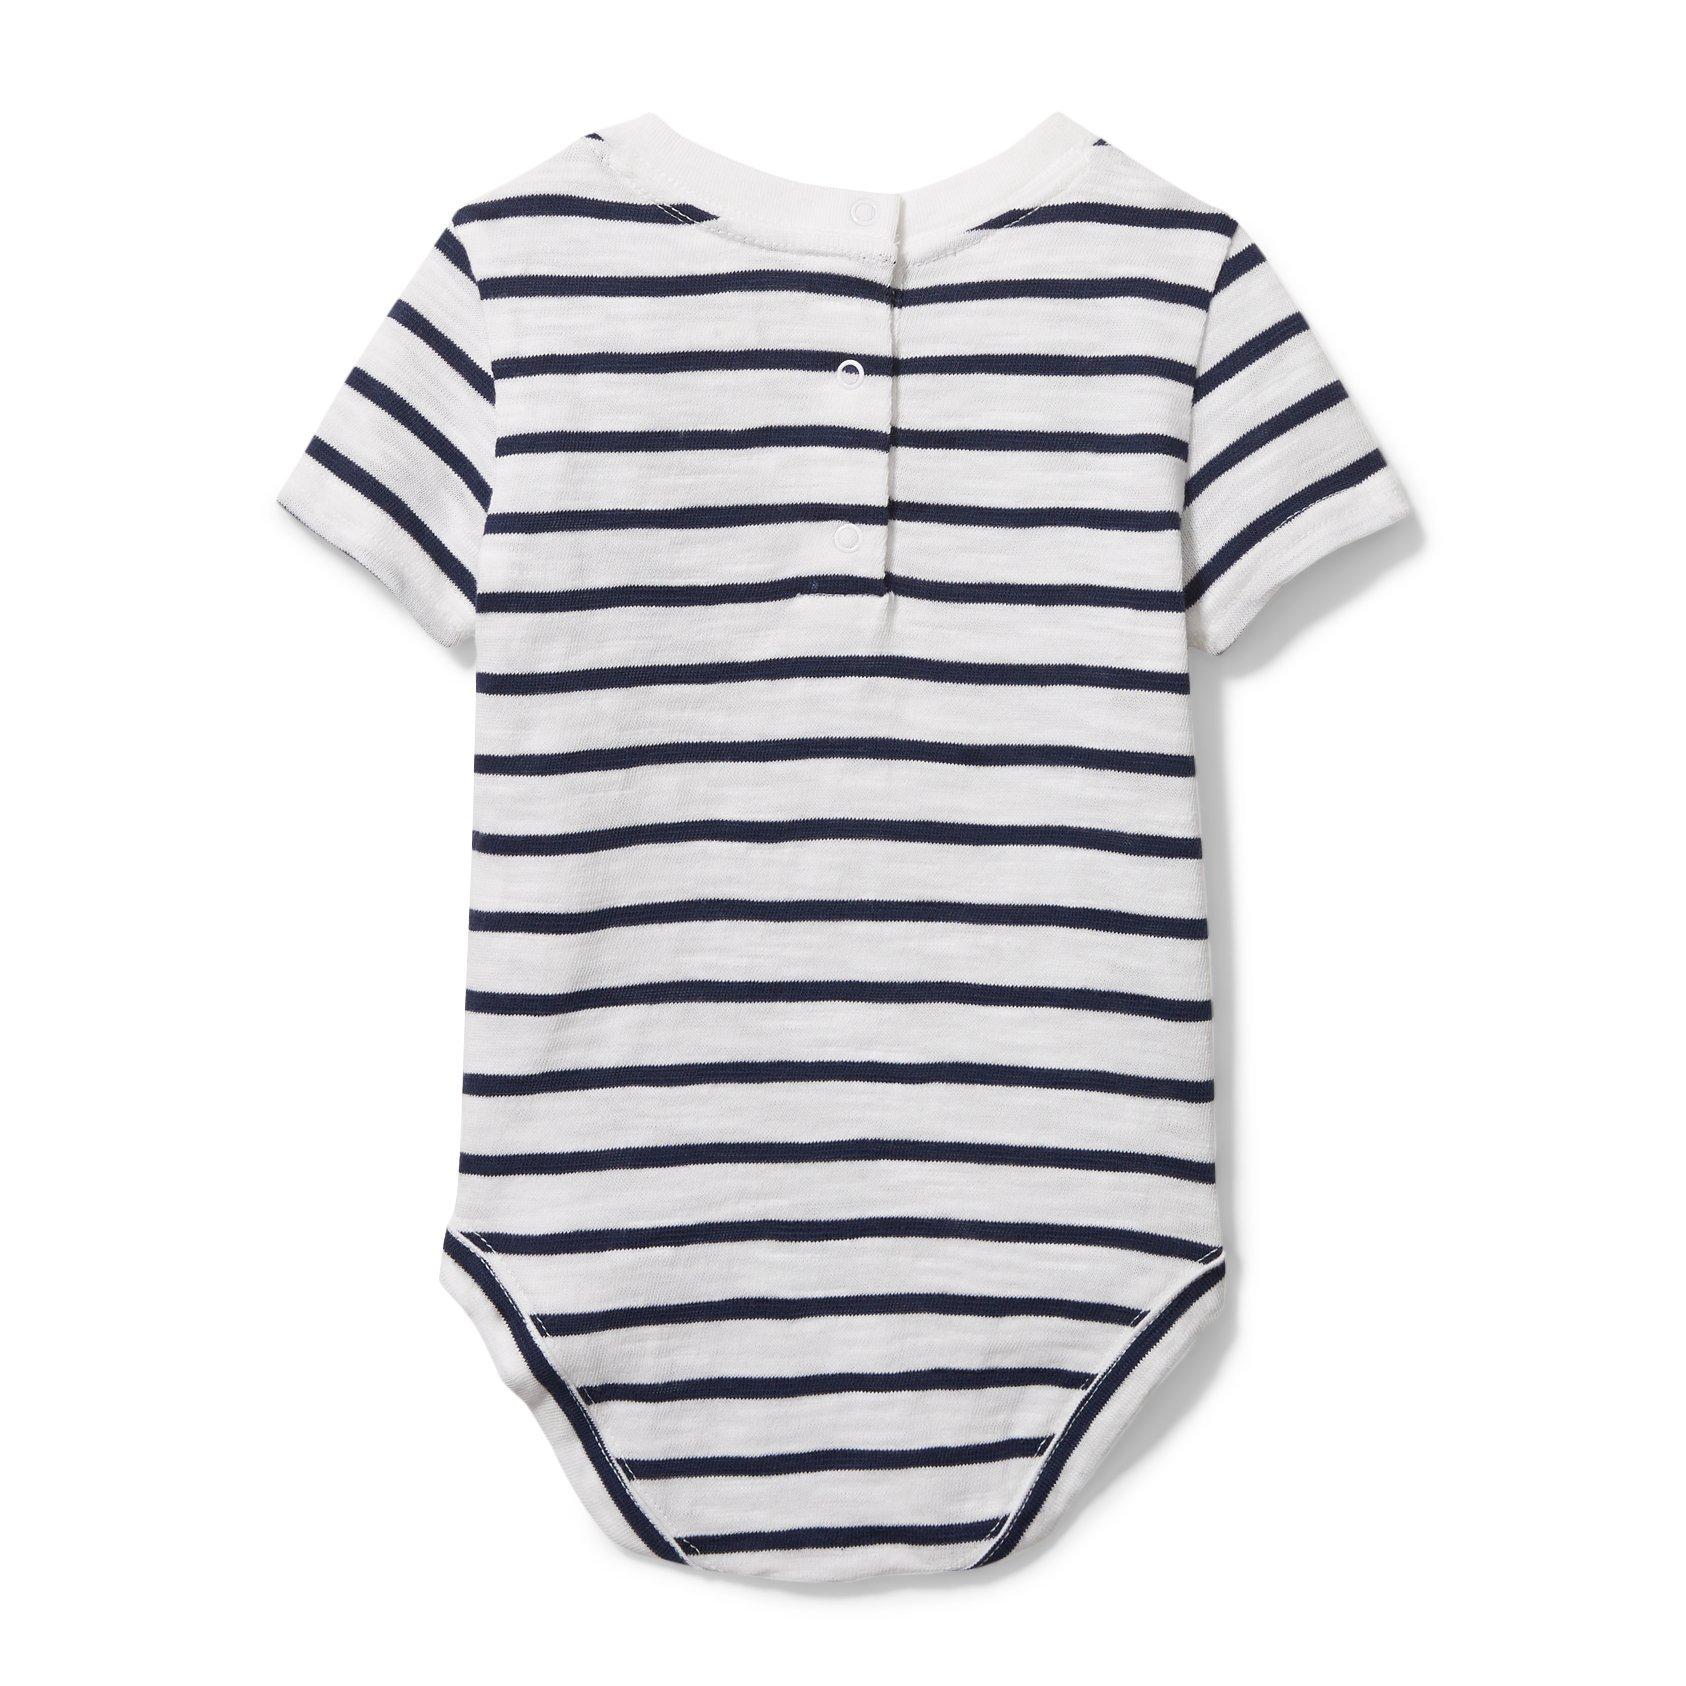 Baby Striped Slub Pocket Bodysuit image number 2